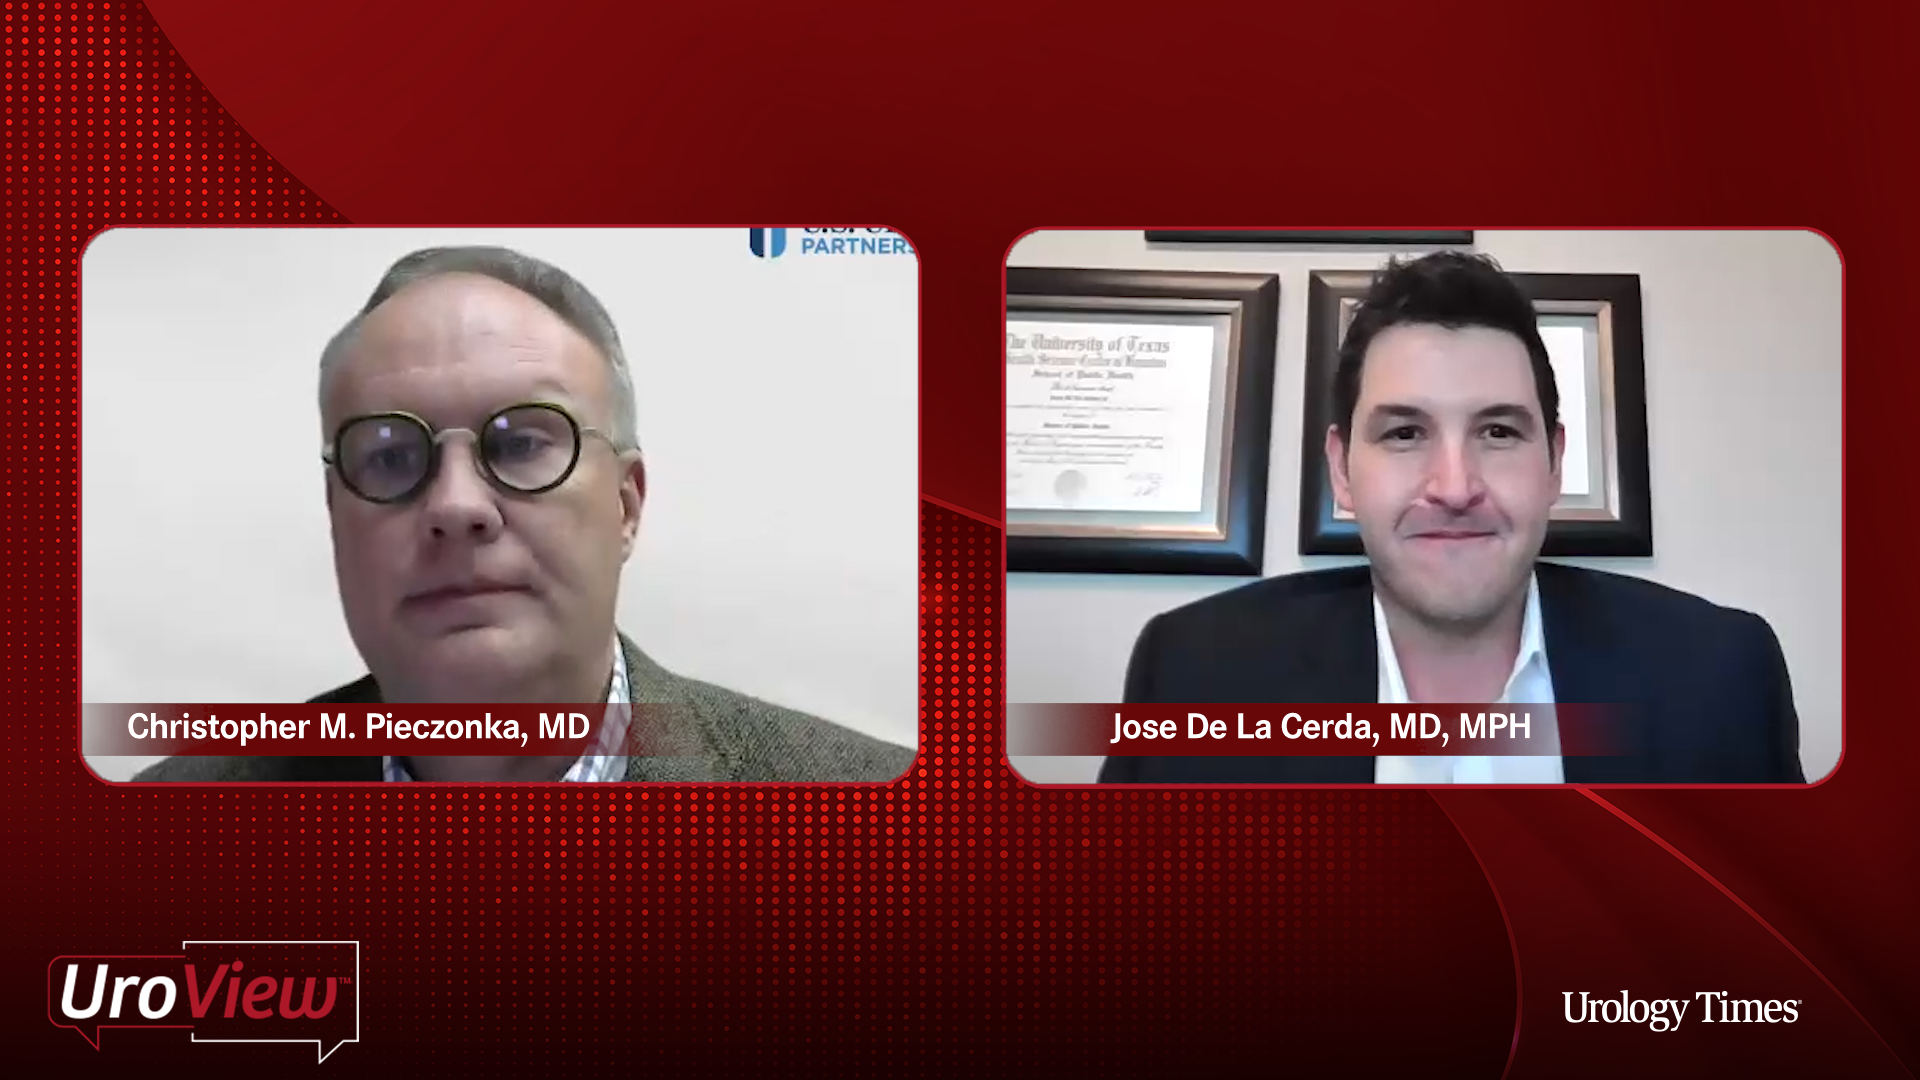 Christopher M. Pieczonka, MD, and Jose De La Cerda, MD, MPH, experts on prostate cancer